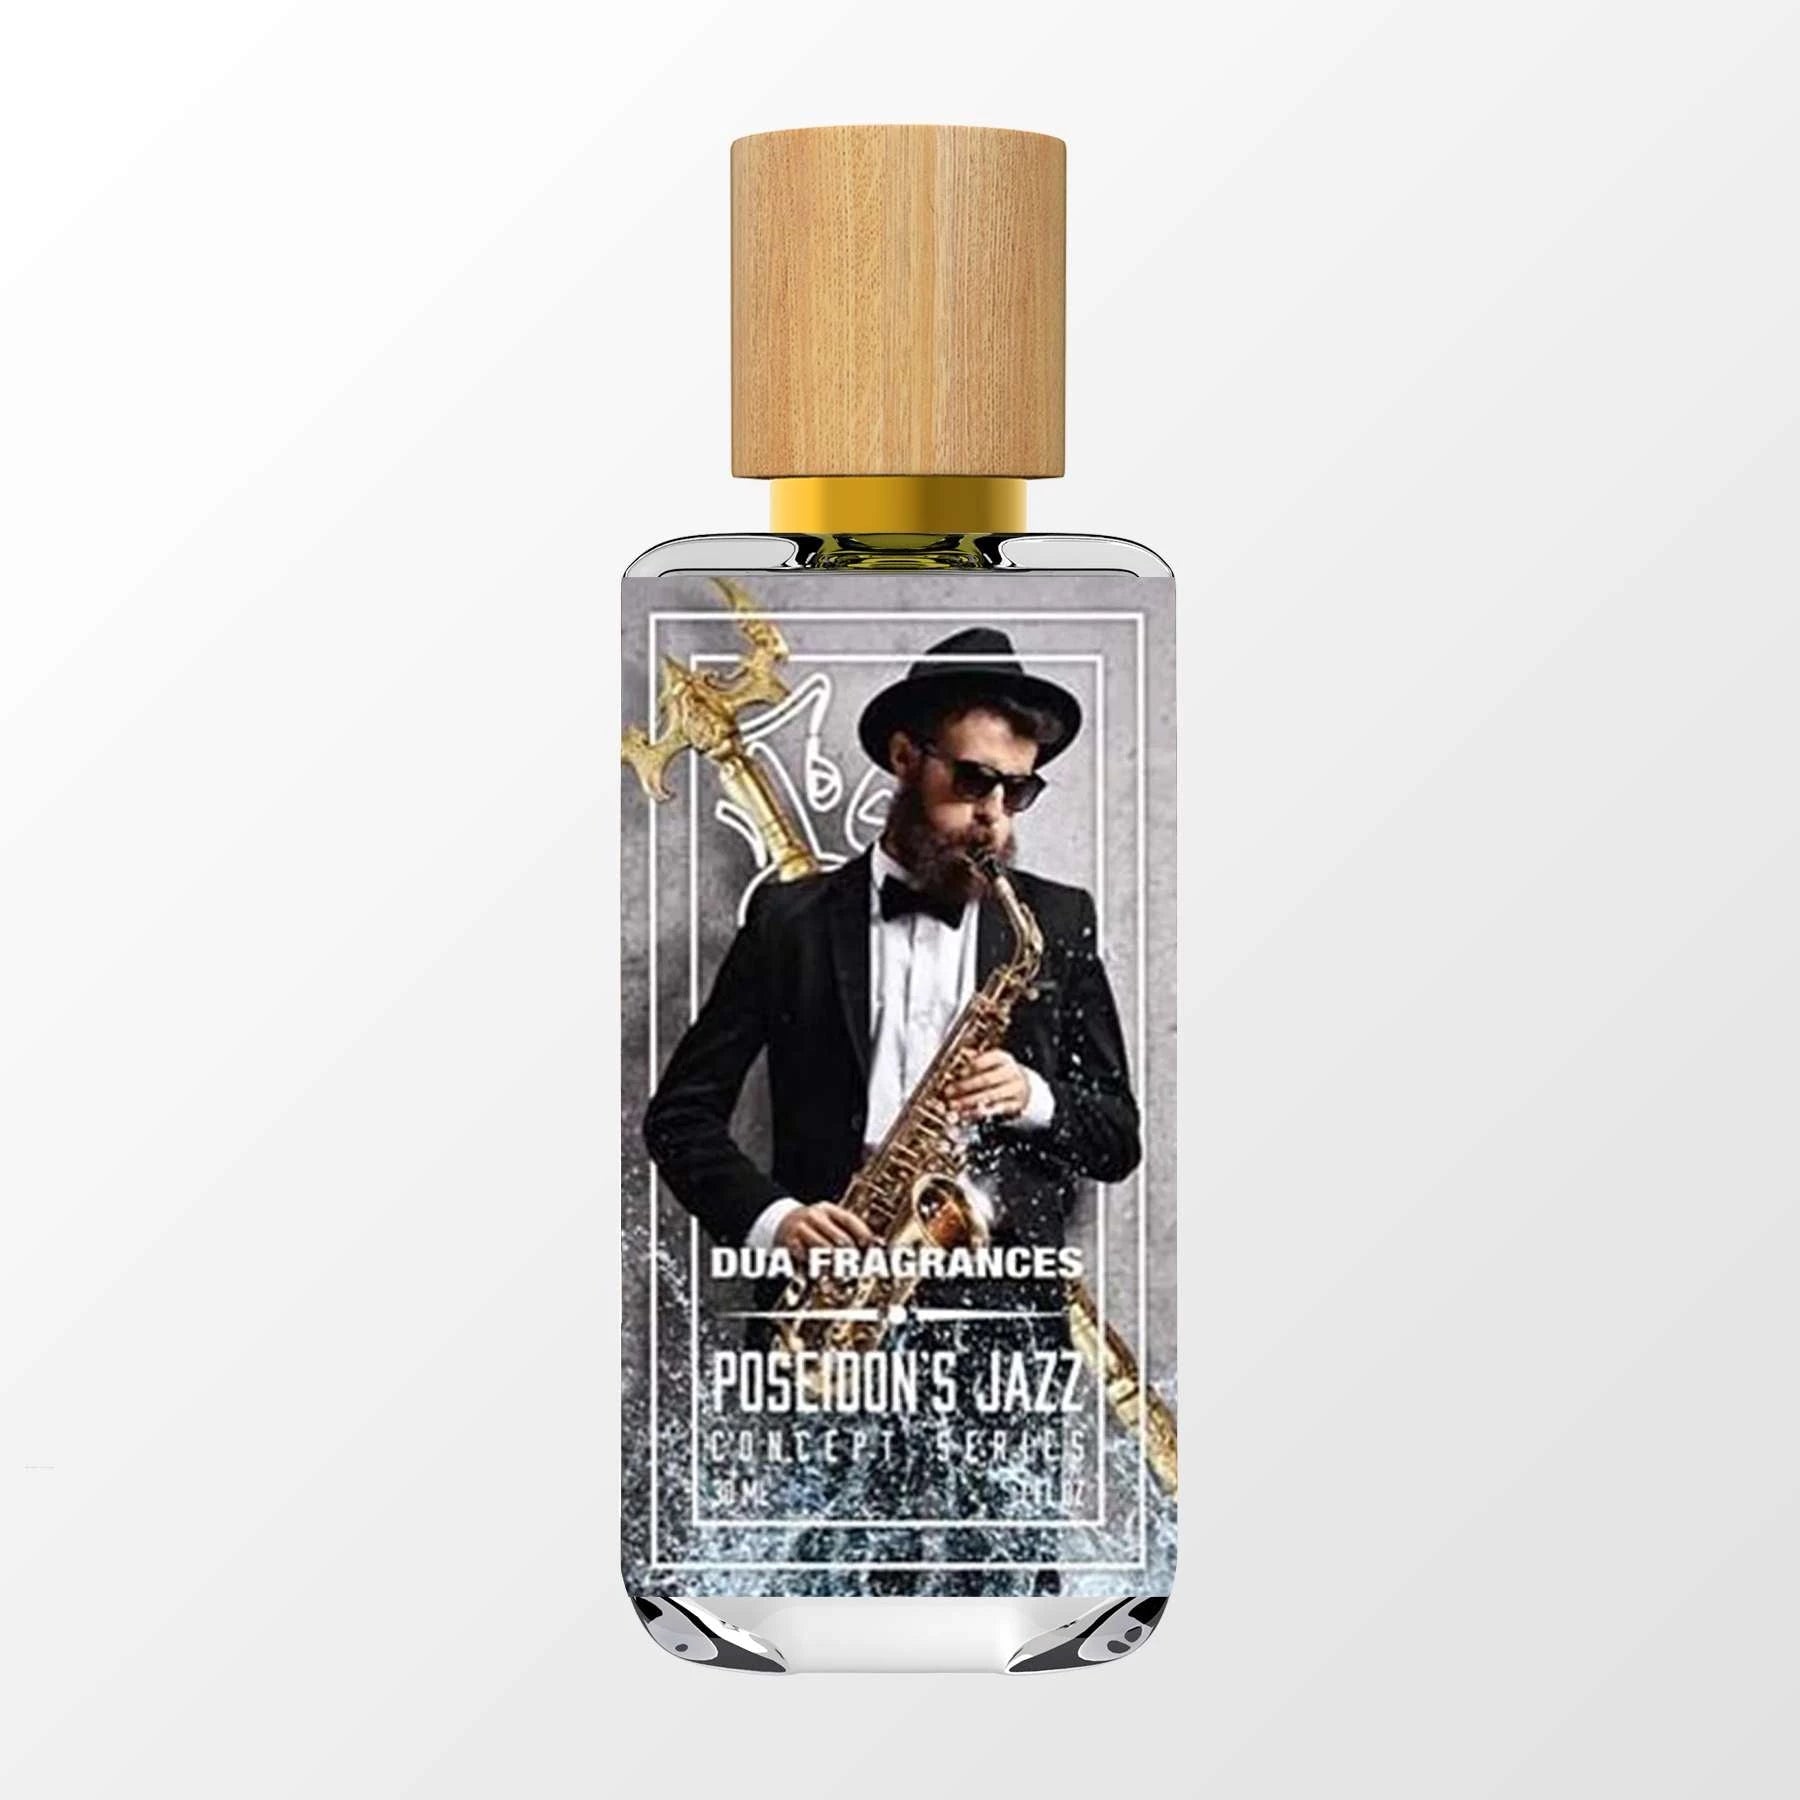 Poseidon’s Jazz - Dua Fragrances - Oriental Woody - Unisex Perfume - 34ml/1.1 fl oz - Extrait de Parfum